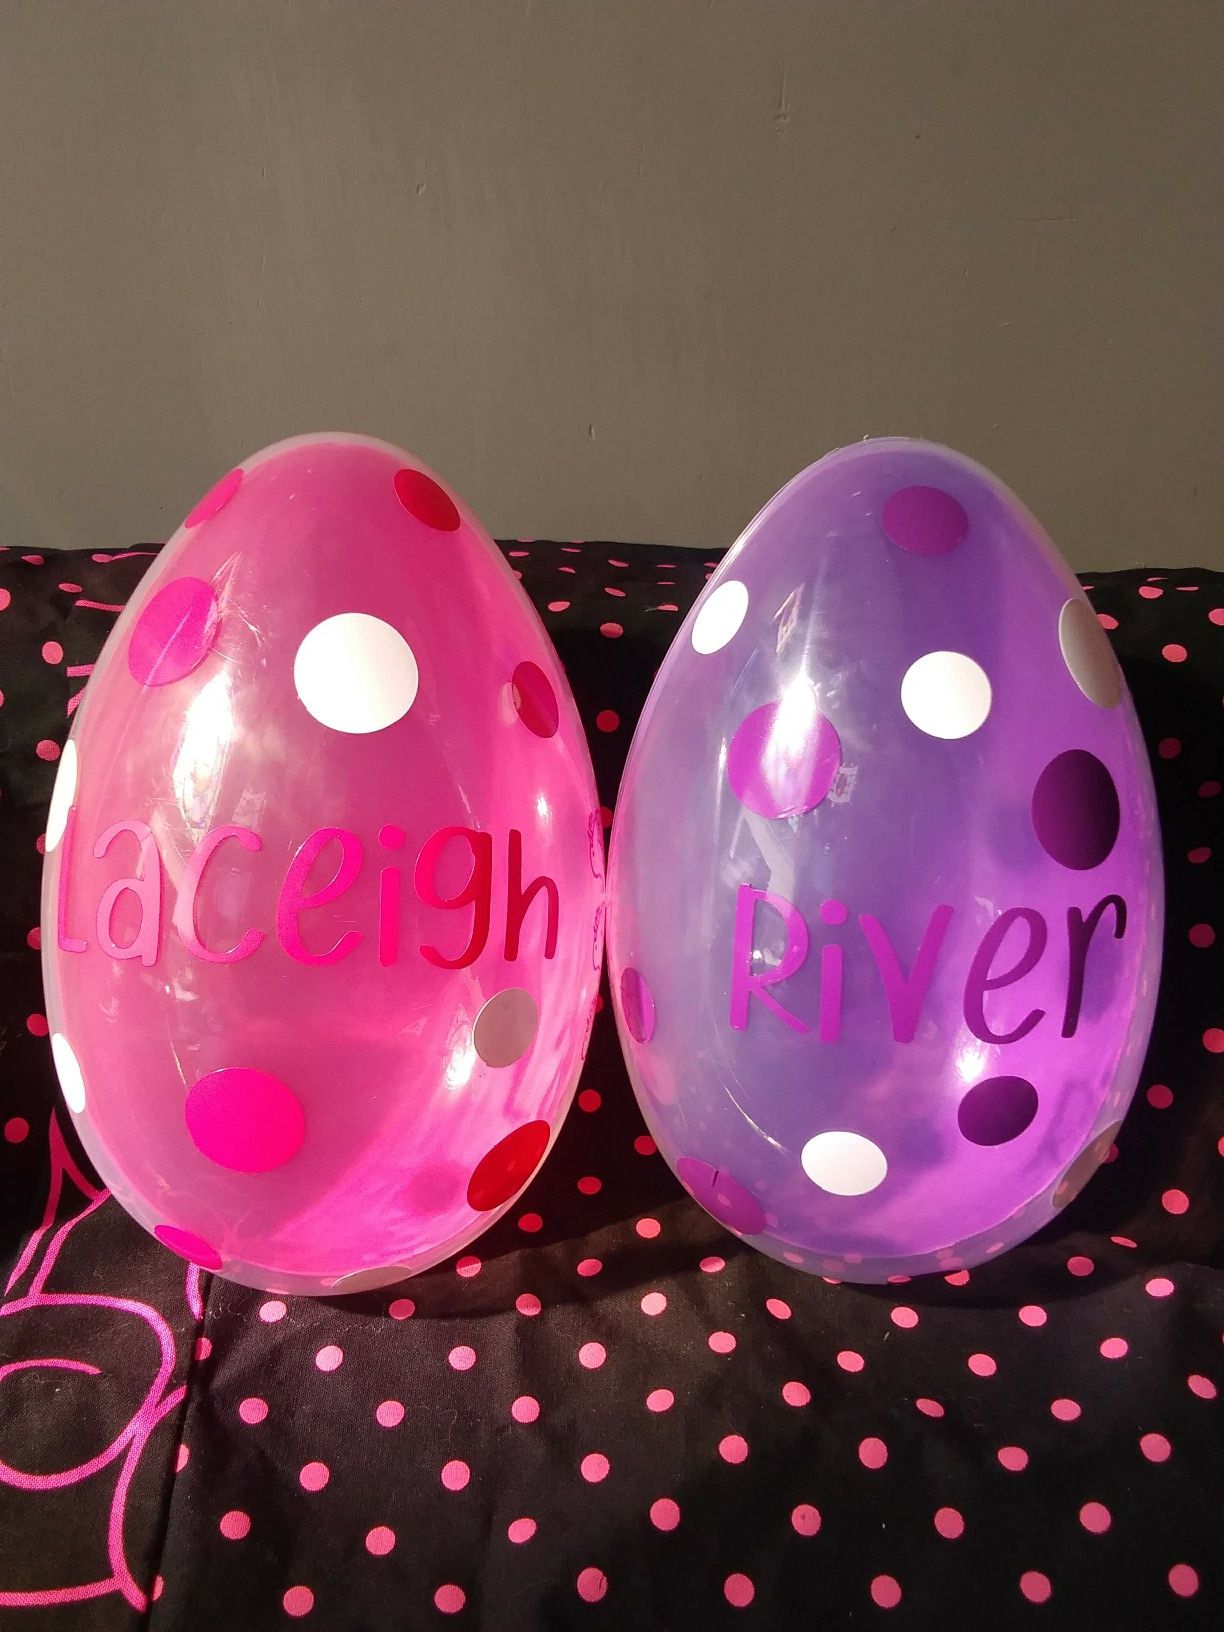 Jumbo Easter Eggs